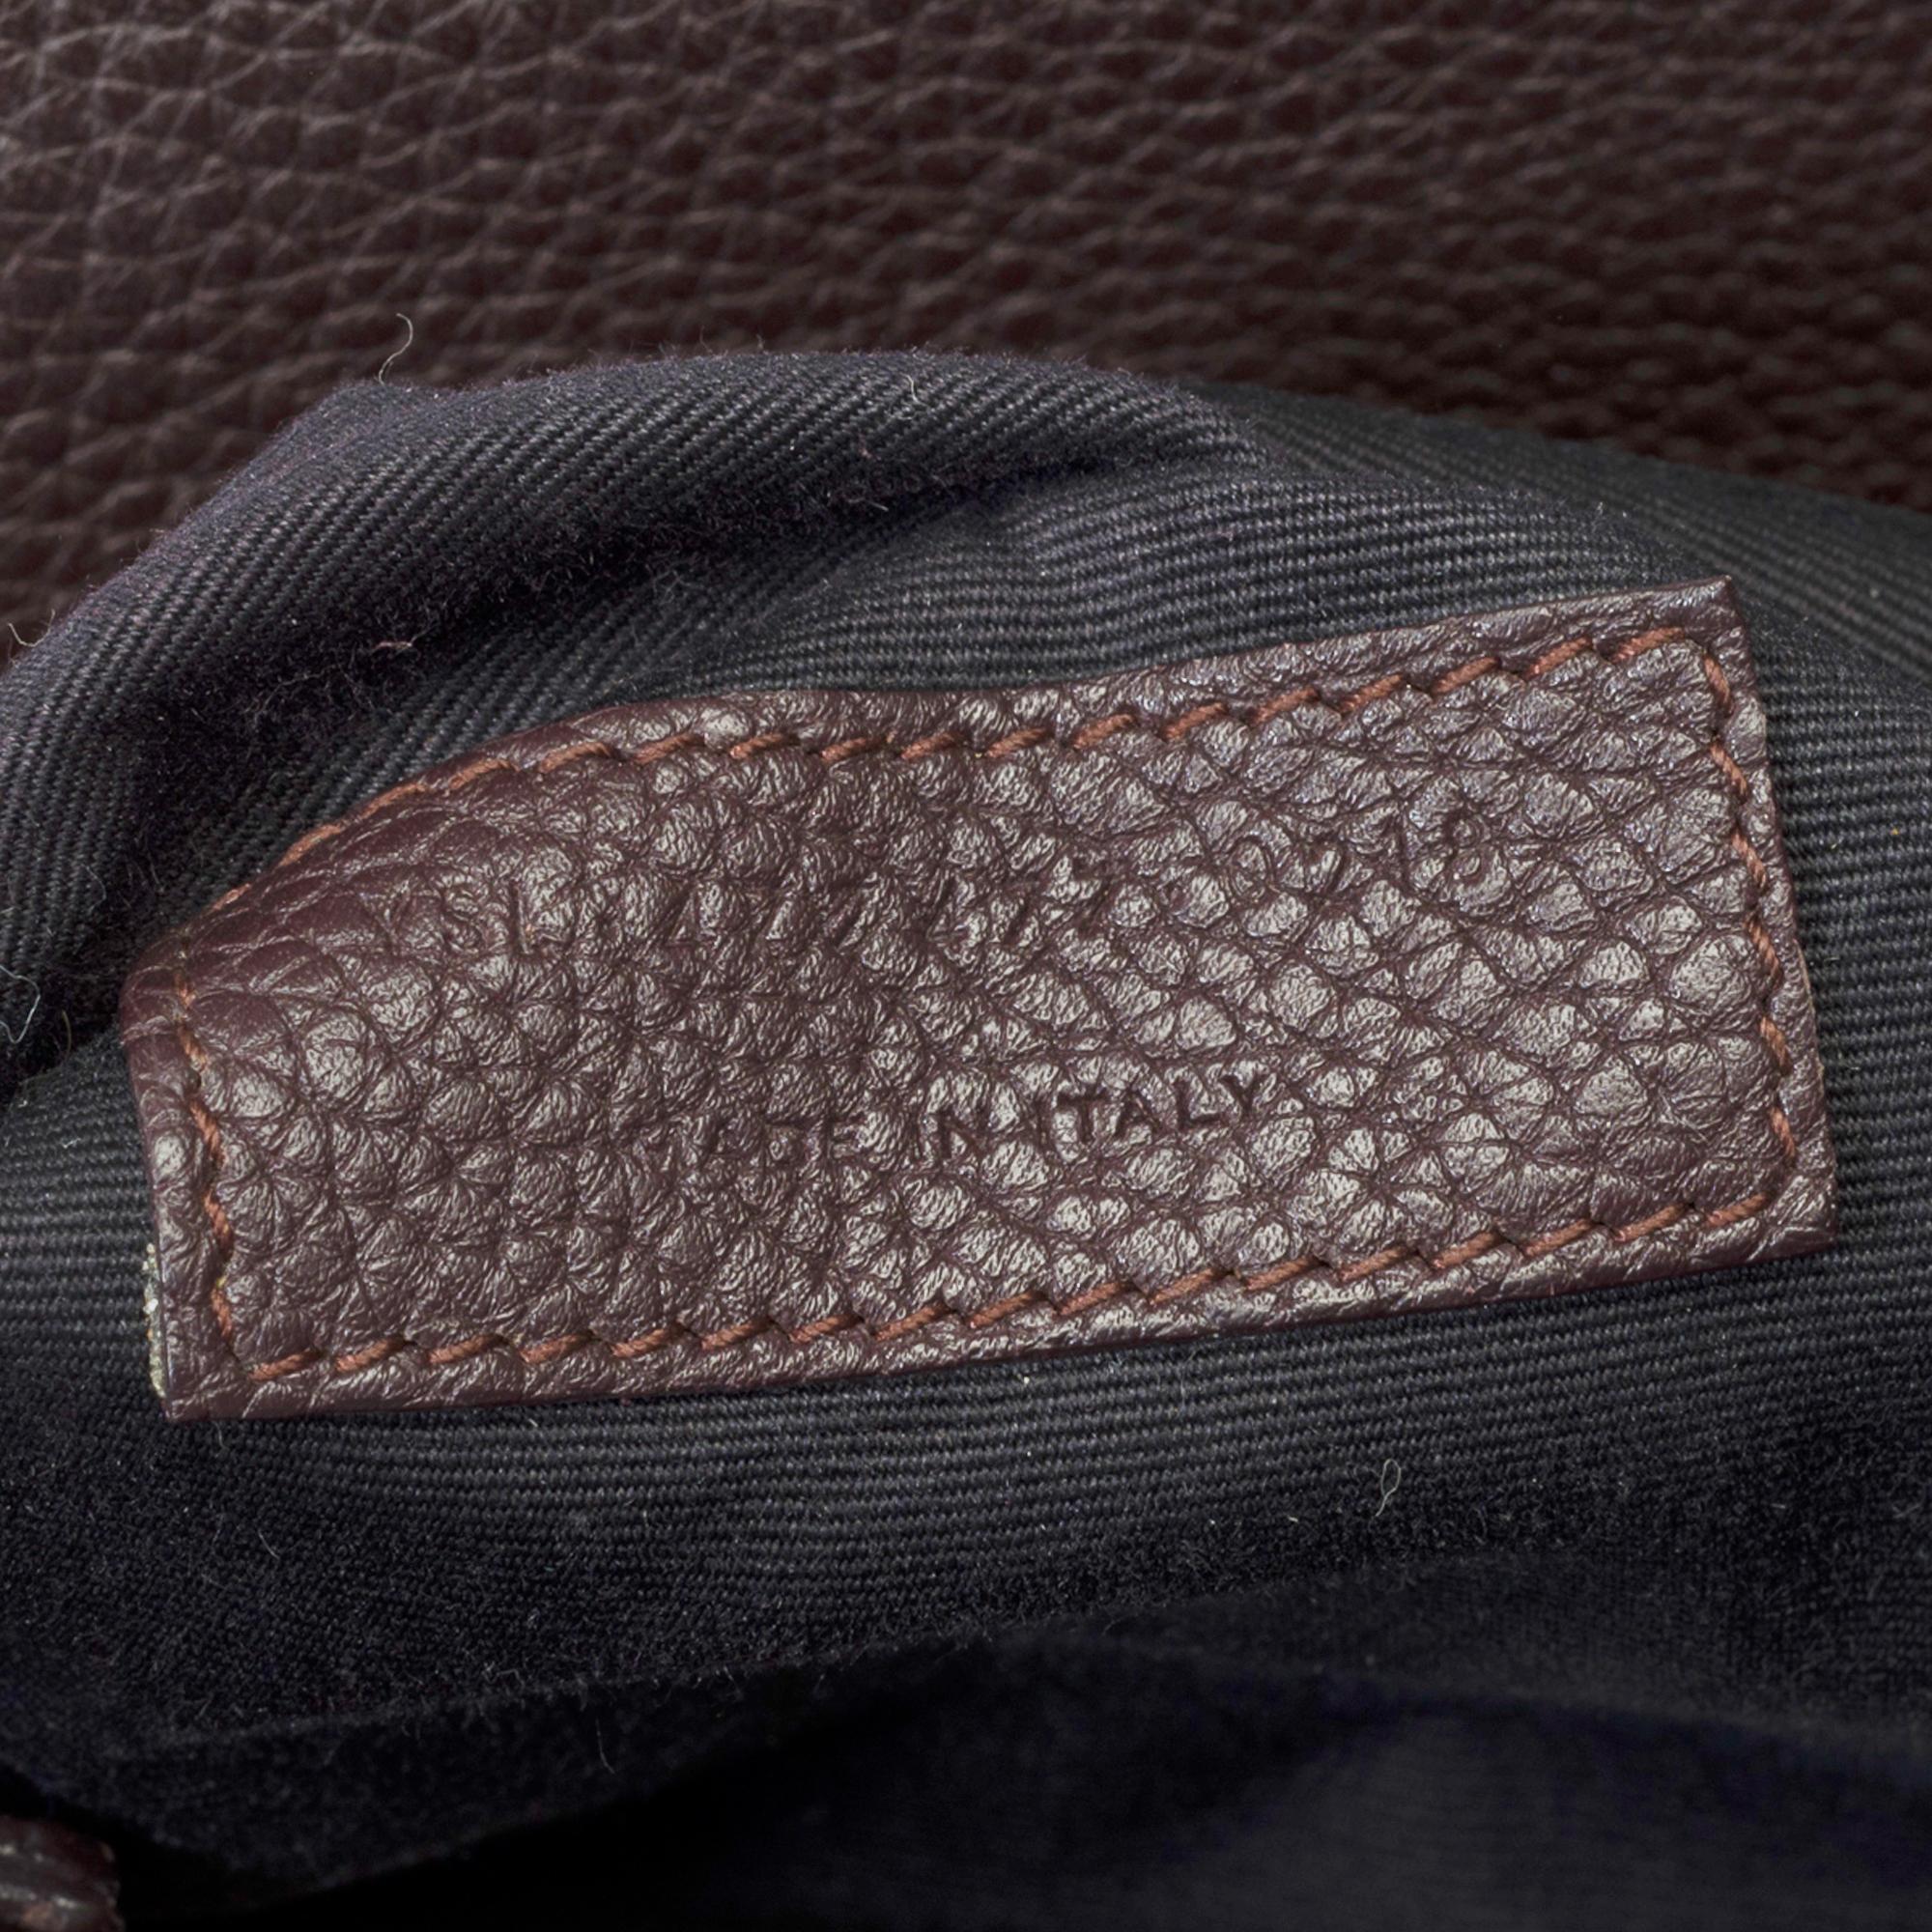 Saint Laurent Nano Sac de Jour handbag strap in burgundy grained leather, SHW For Sale 3